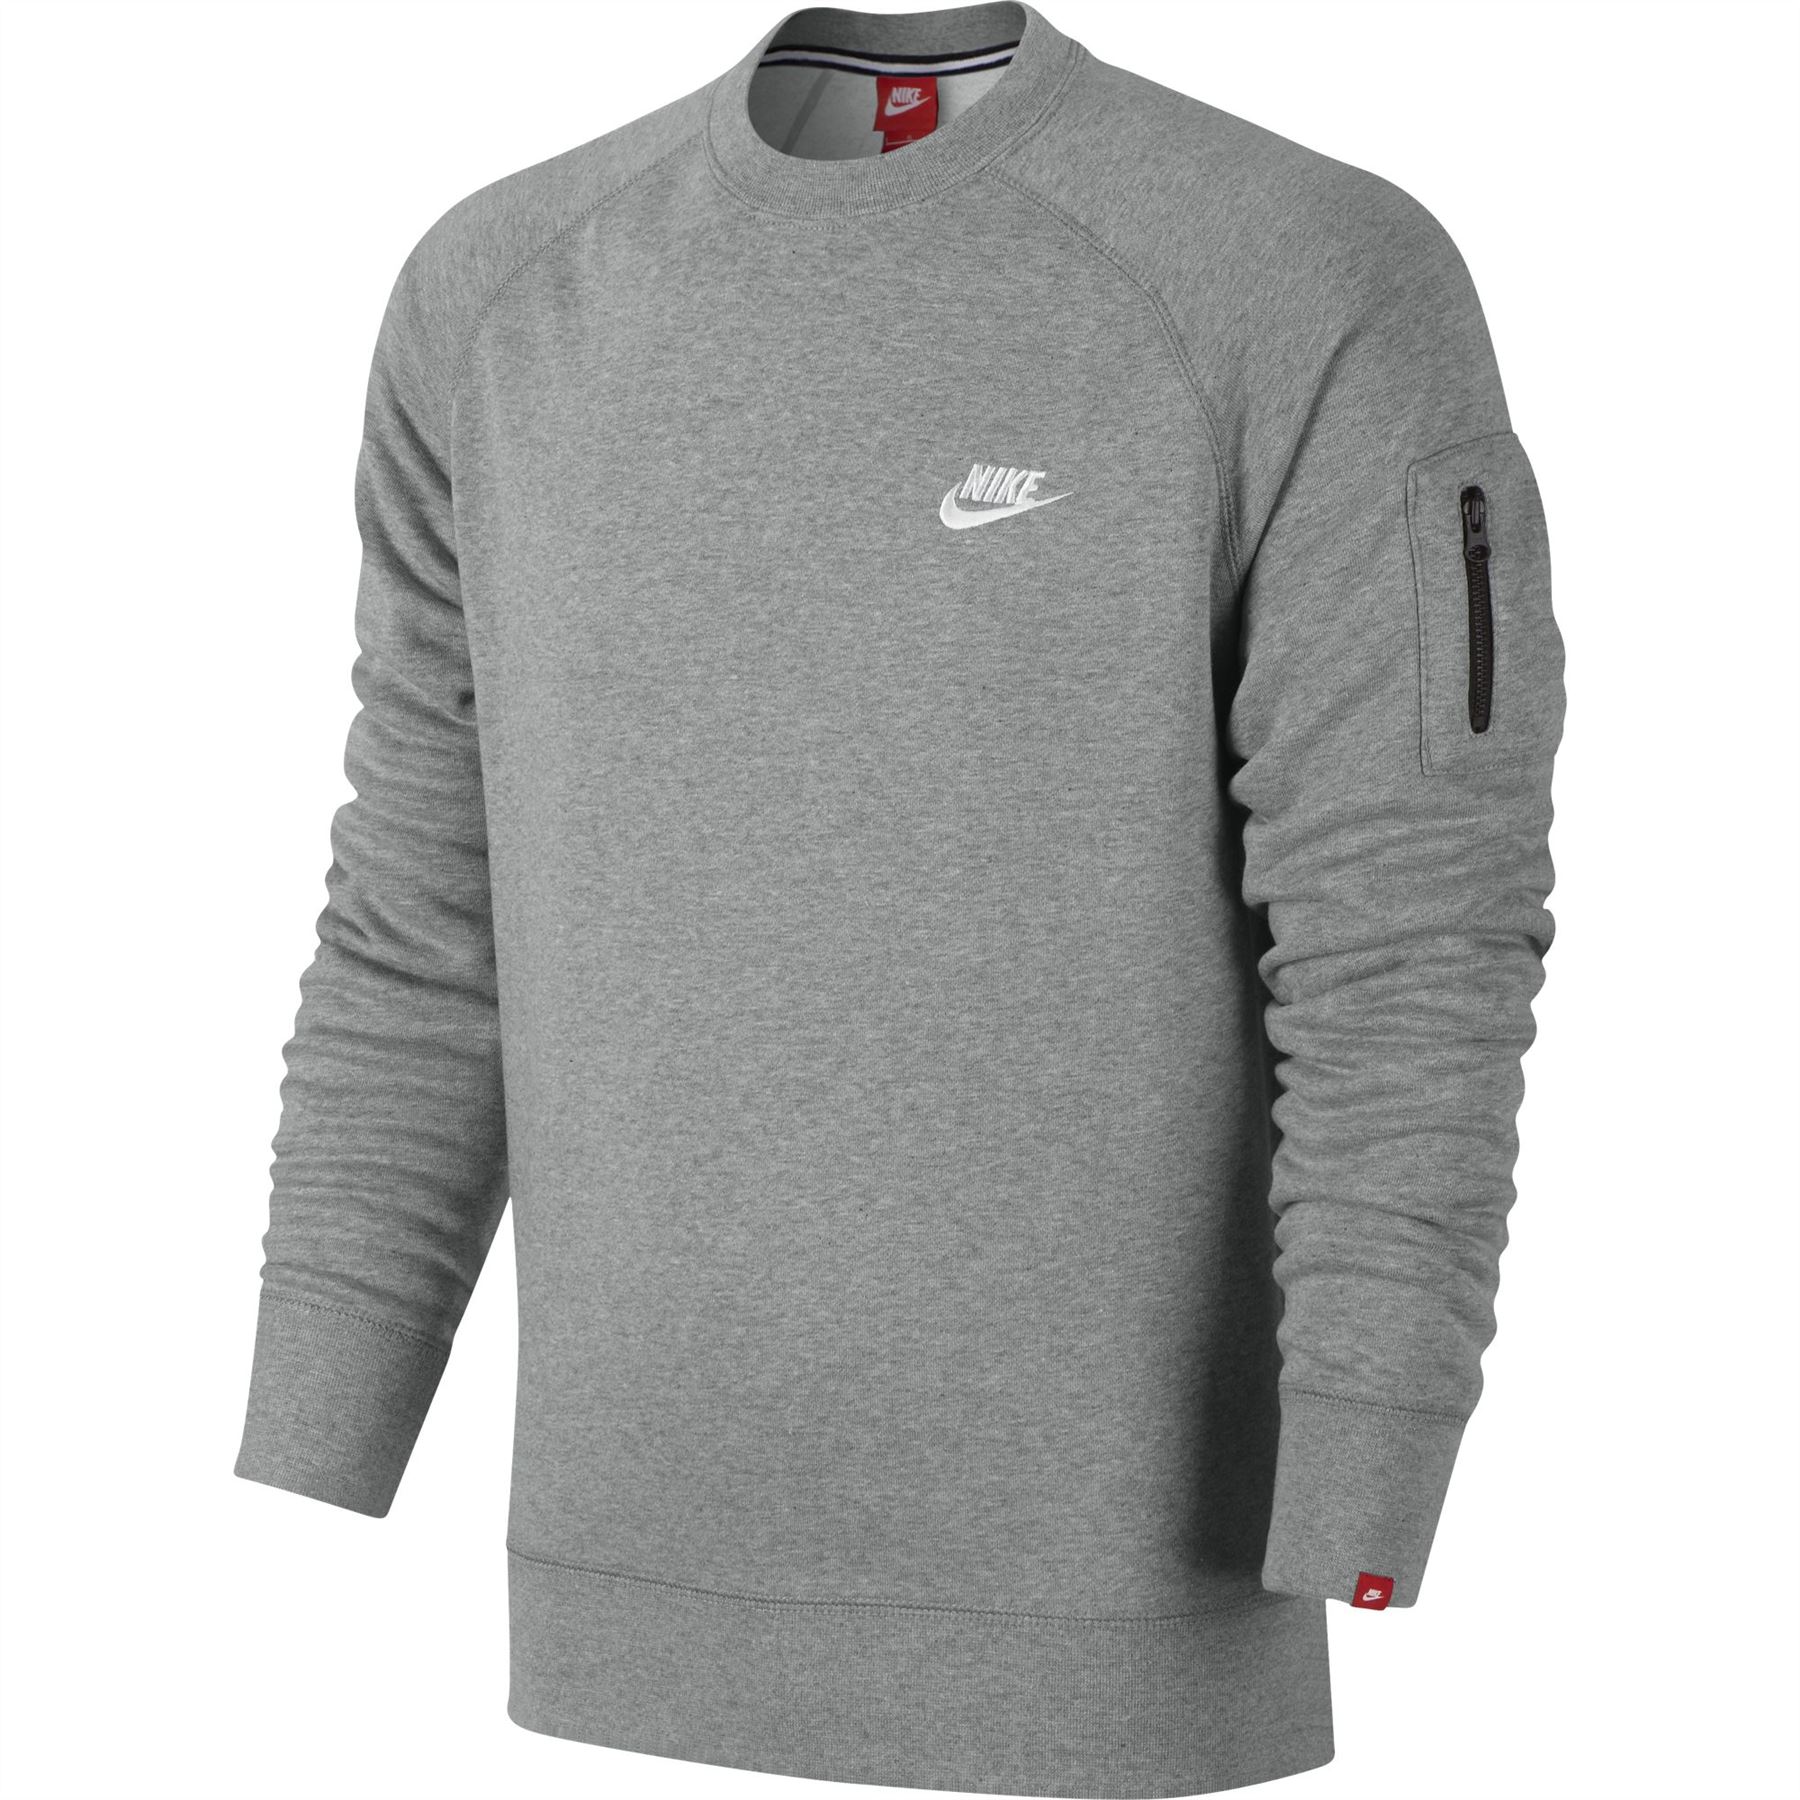 Nike Mens Fleece Lined Sweatshirt Jumper Crew Neck Top Black Blue Grey ...